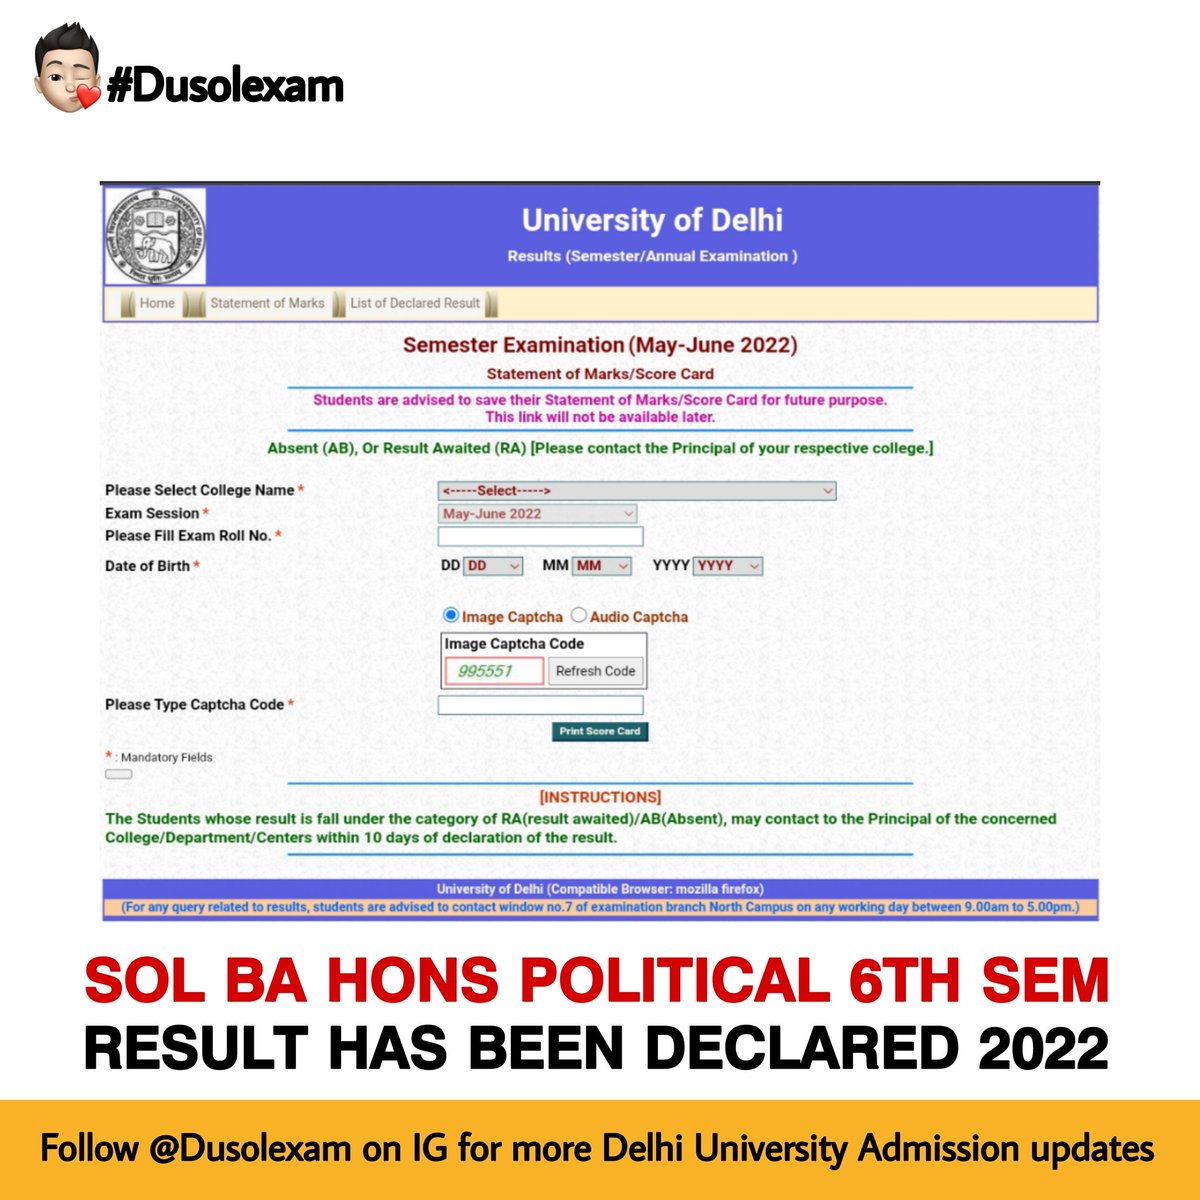 DU SOL BA Political Hons 6th Semester Results Has Been Declared Now 2022 instagram.com/p/CjXTD6uhOnC/…